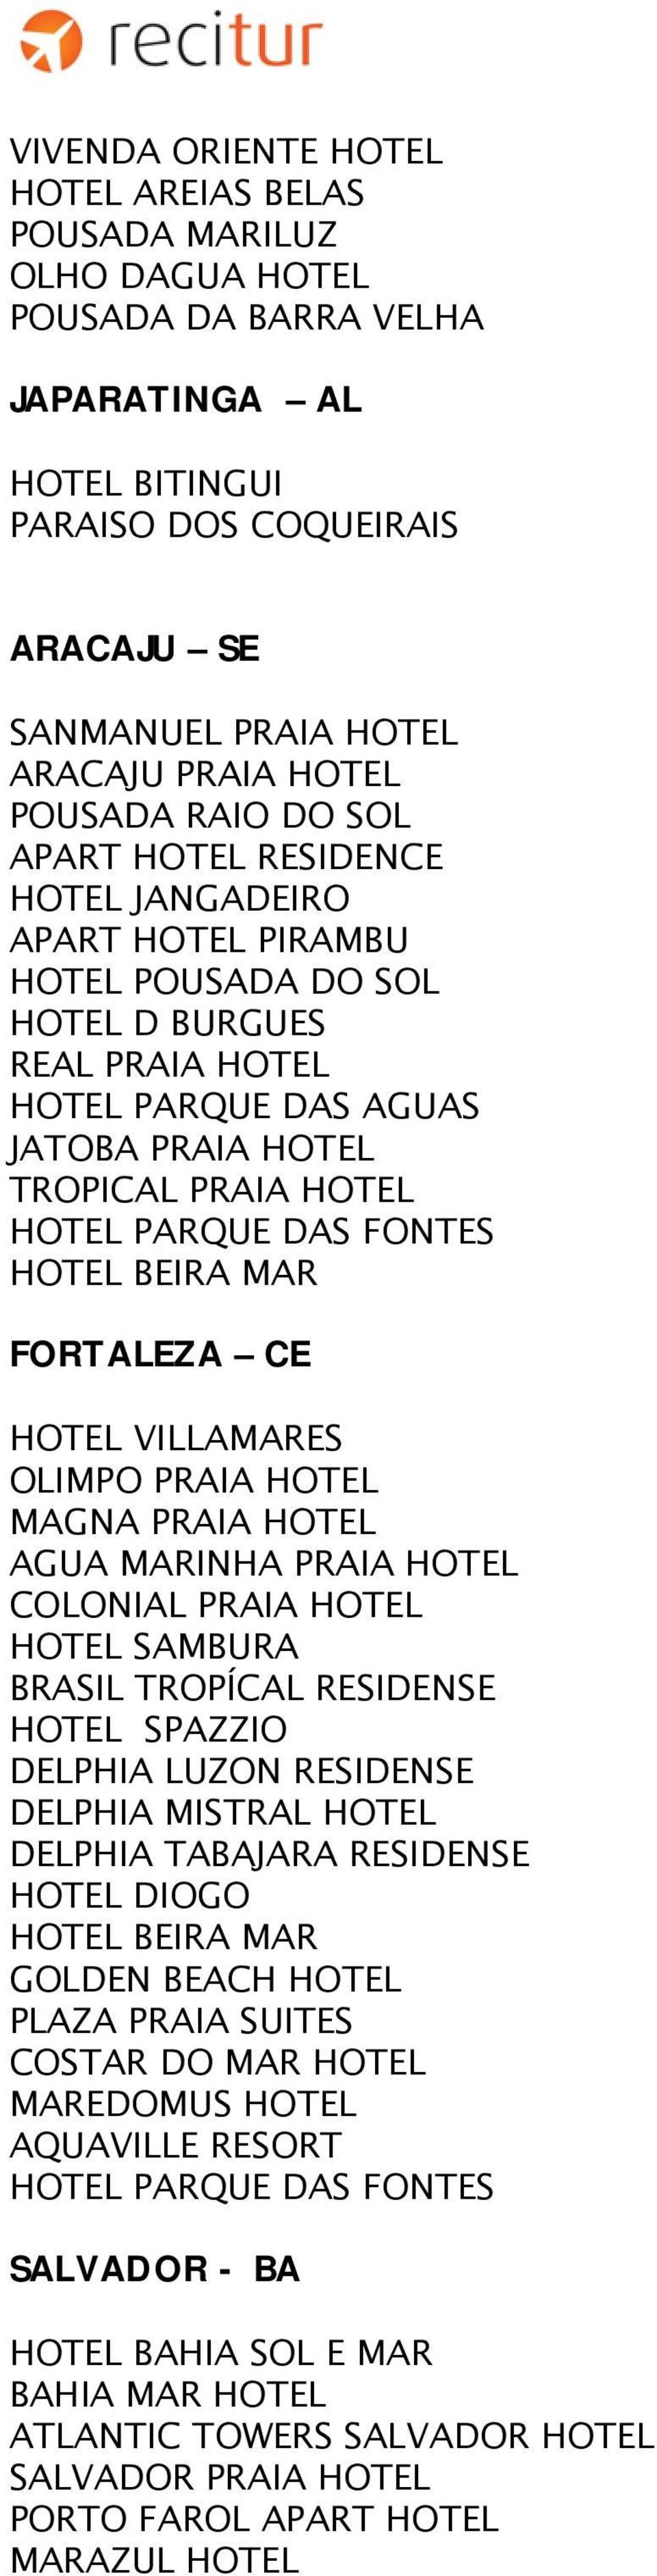 HOTEL HOTEL PARQUE DAS FONTES HOTEL BEIRA MAR FORTALEZA CE HOTEL VILLAMARES OLIMPO PRAIA HOTEL MAGNA PRAIA HOTEL AGUA MARINHA PRAIA HOTEL COLONIAL PRAIA HOTEL HOTEL SAMBURA BRASIL TROPÍCAL RESIDENSE